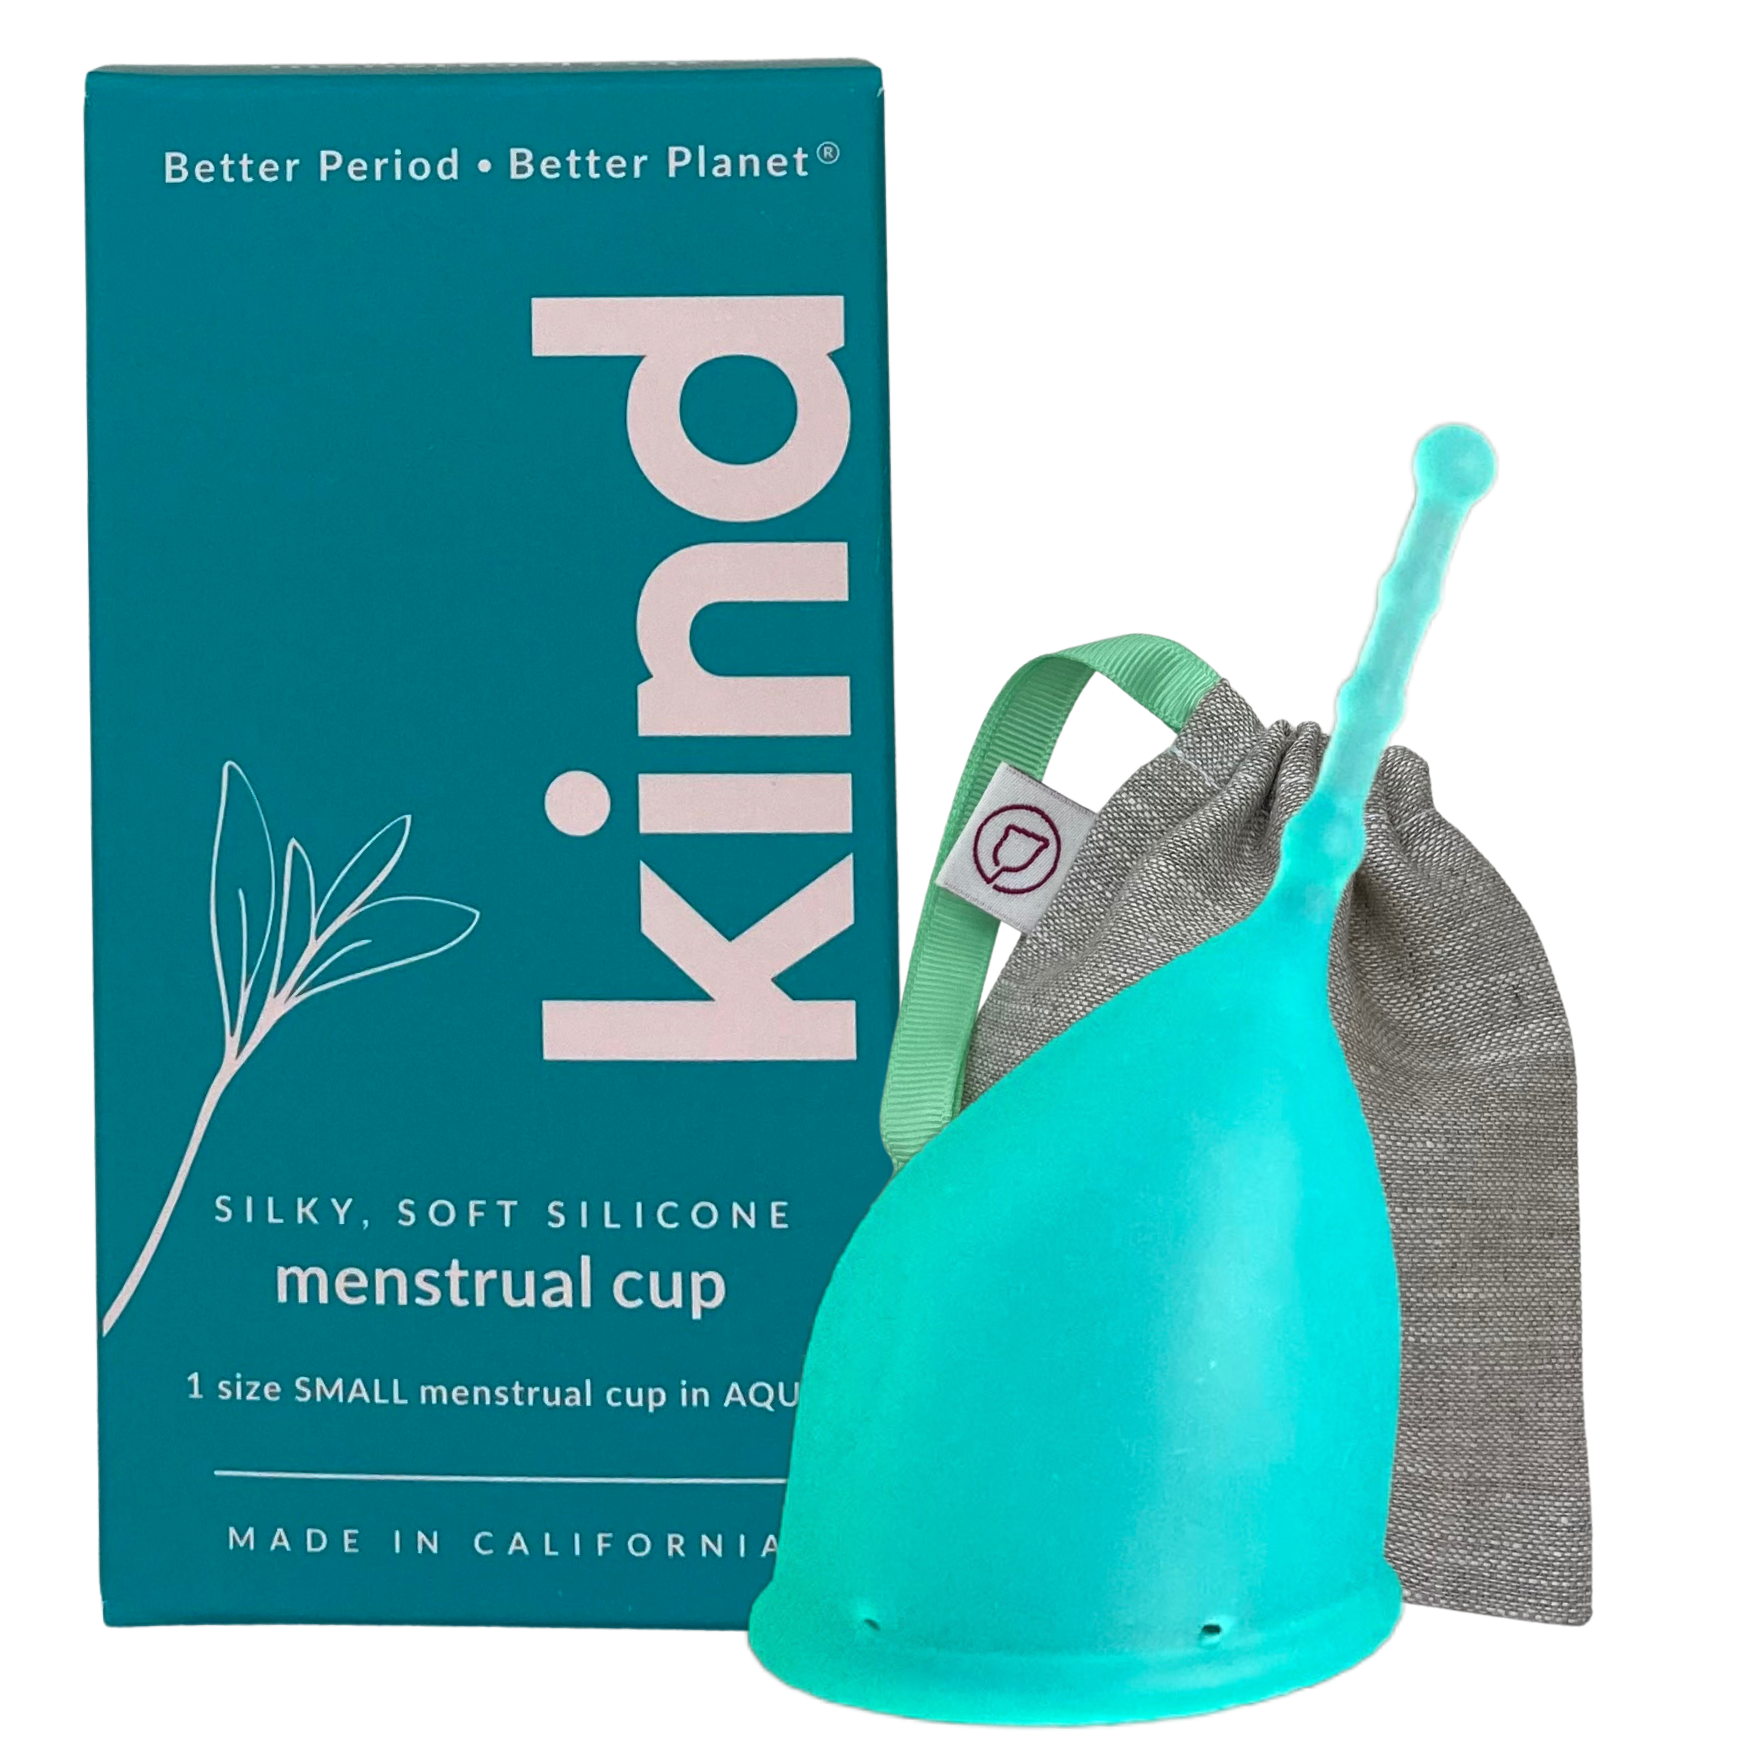 Shecup C (C = Classic Knob Stem) – Health grade silicone menstrual cup